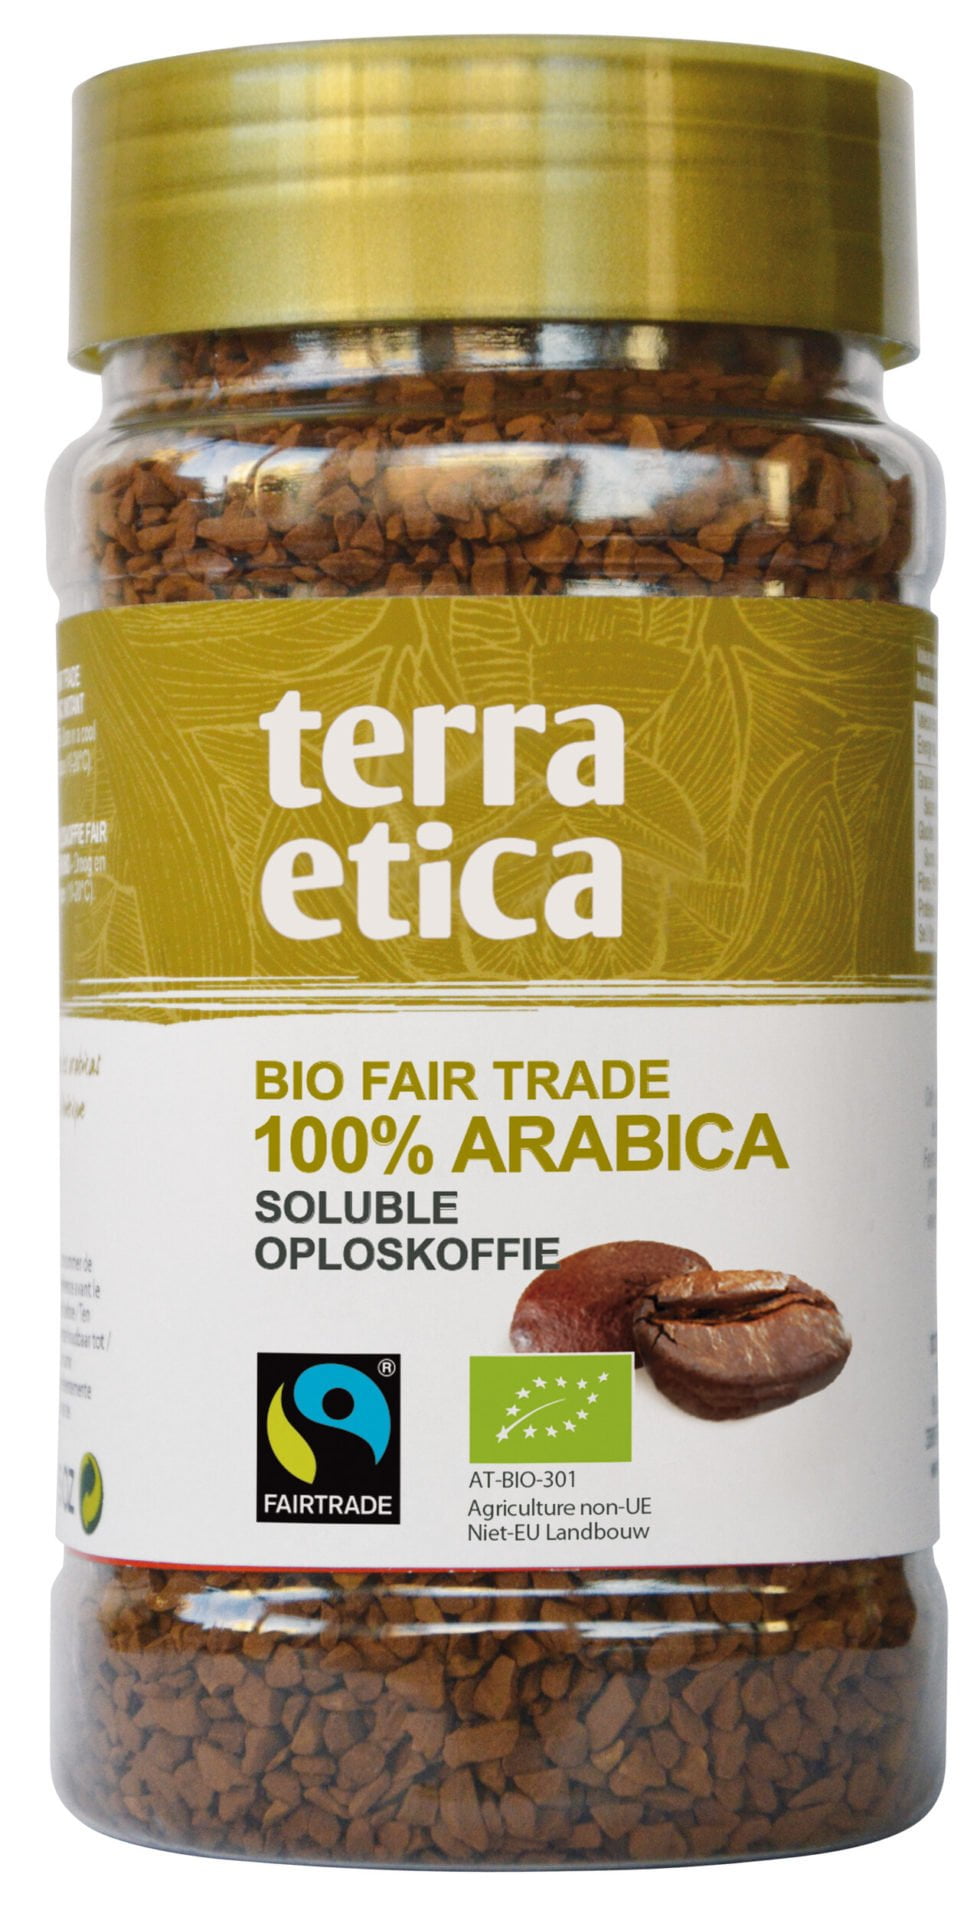 https://terraetica.be/wp-content/uploads/2020/11/terra-etica-cafe-soluble.jpg